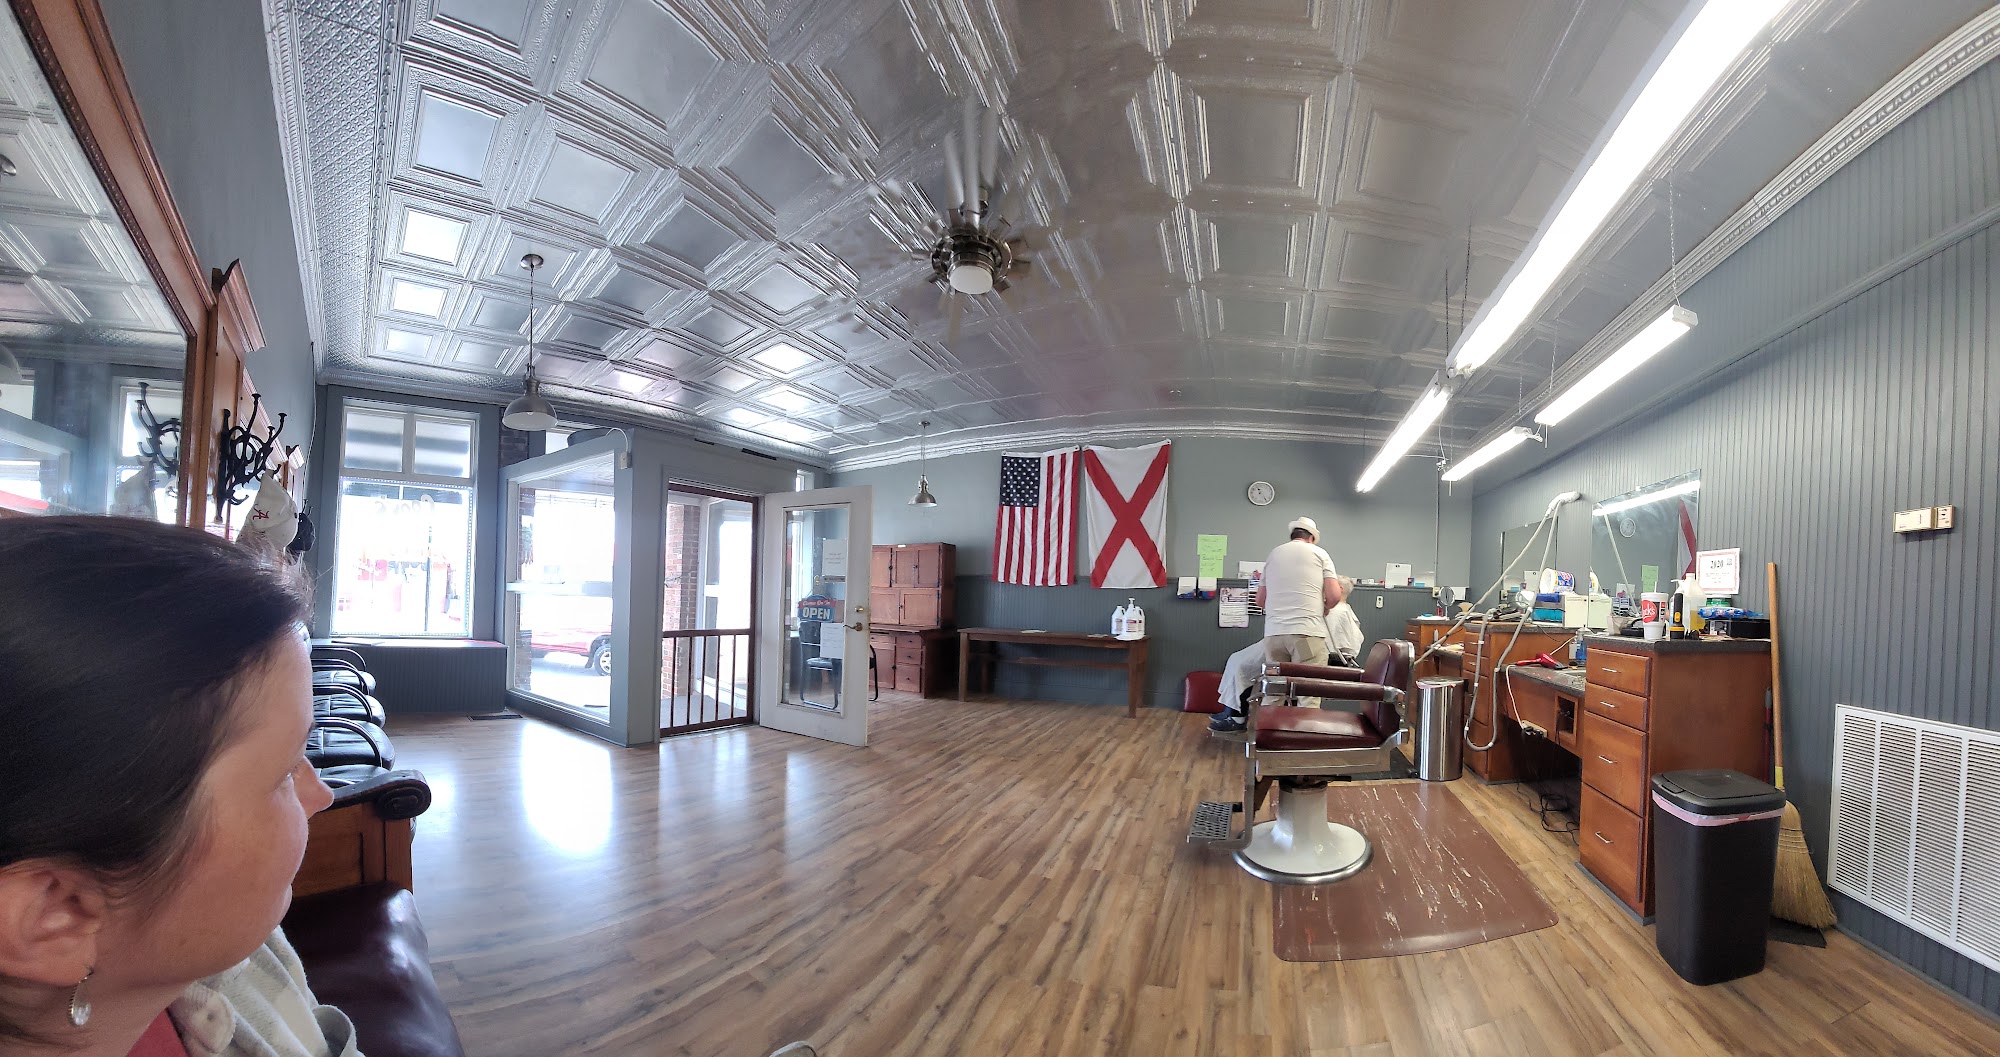 Cook's Barber Shop 72 W Main St, Collinsville Alabama 35961